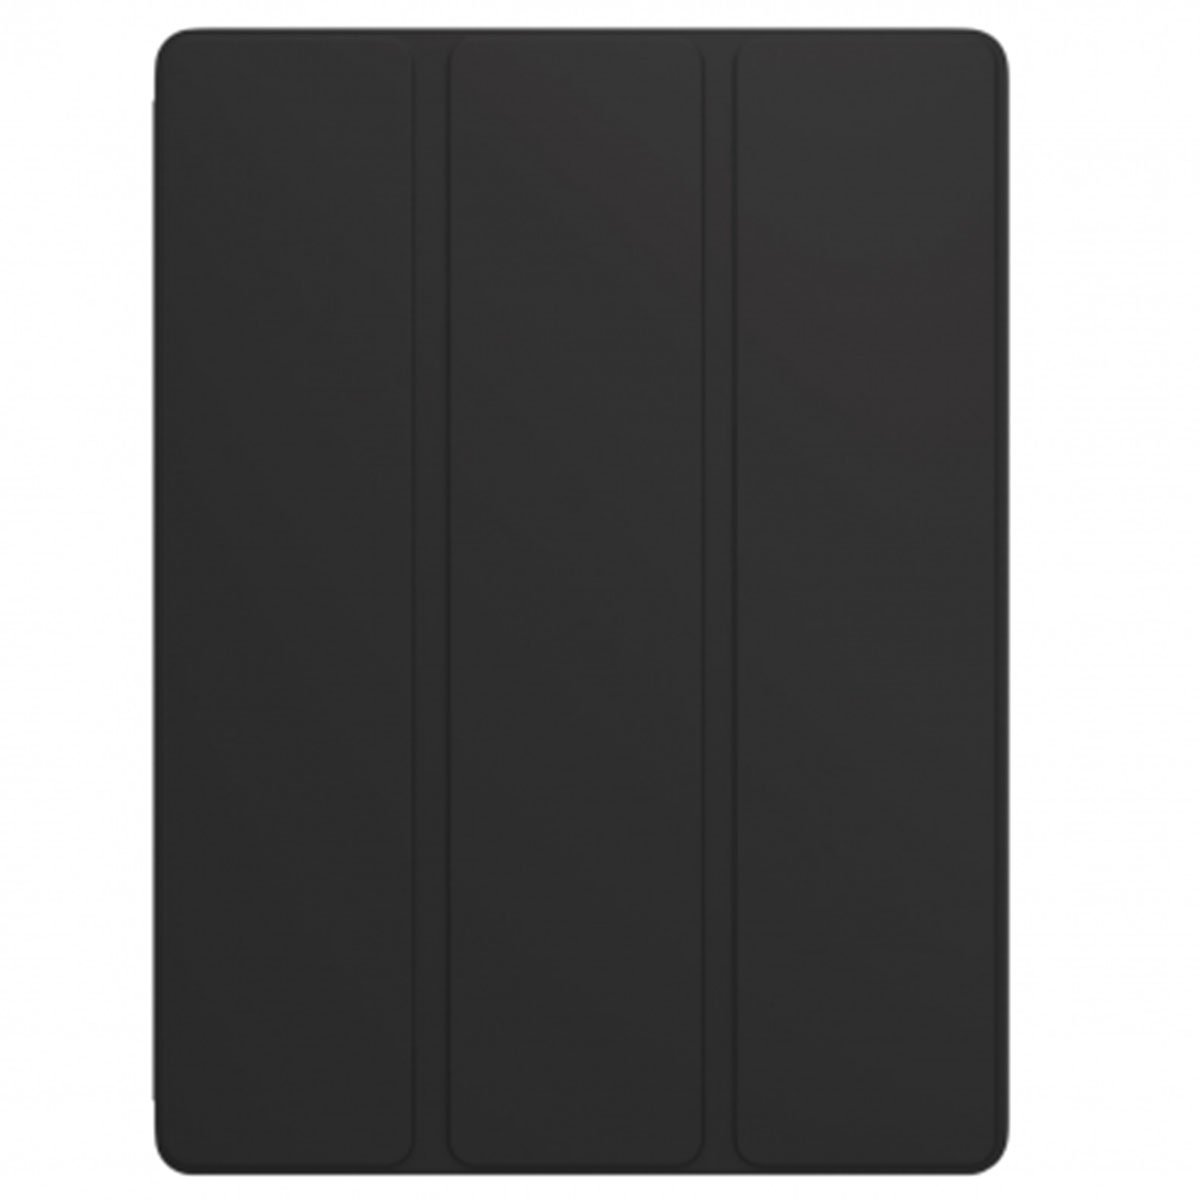 Husa de protectie tableta Next One pentru Apple iPad 10.2 inch, Suport Pen, Protectie 360, Plastic si microfiba interior, Black